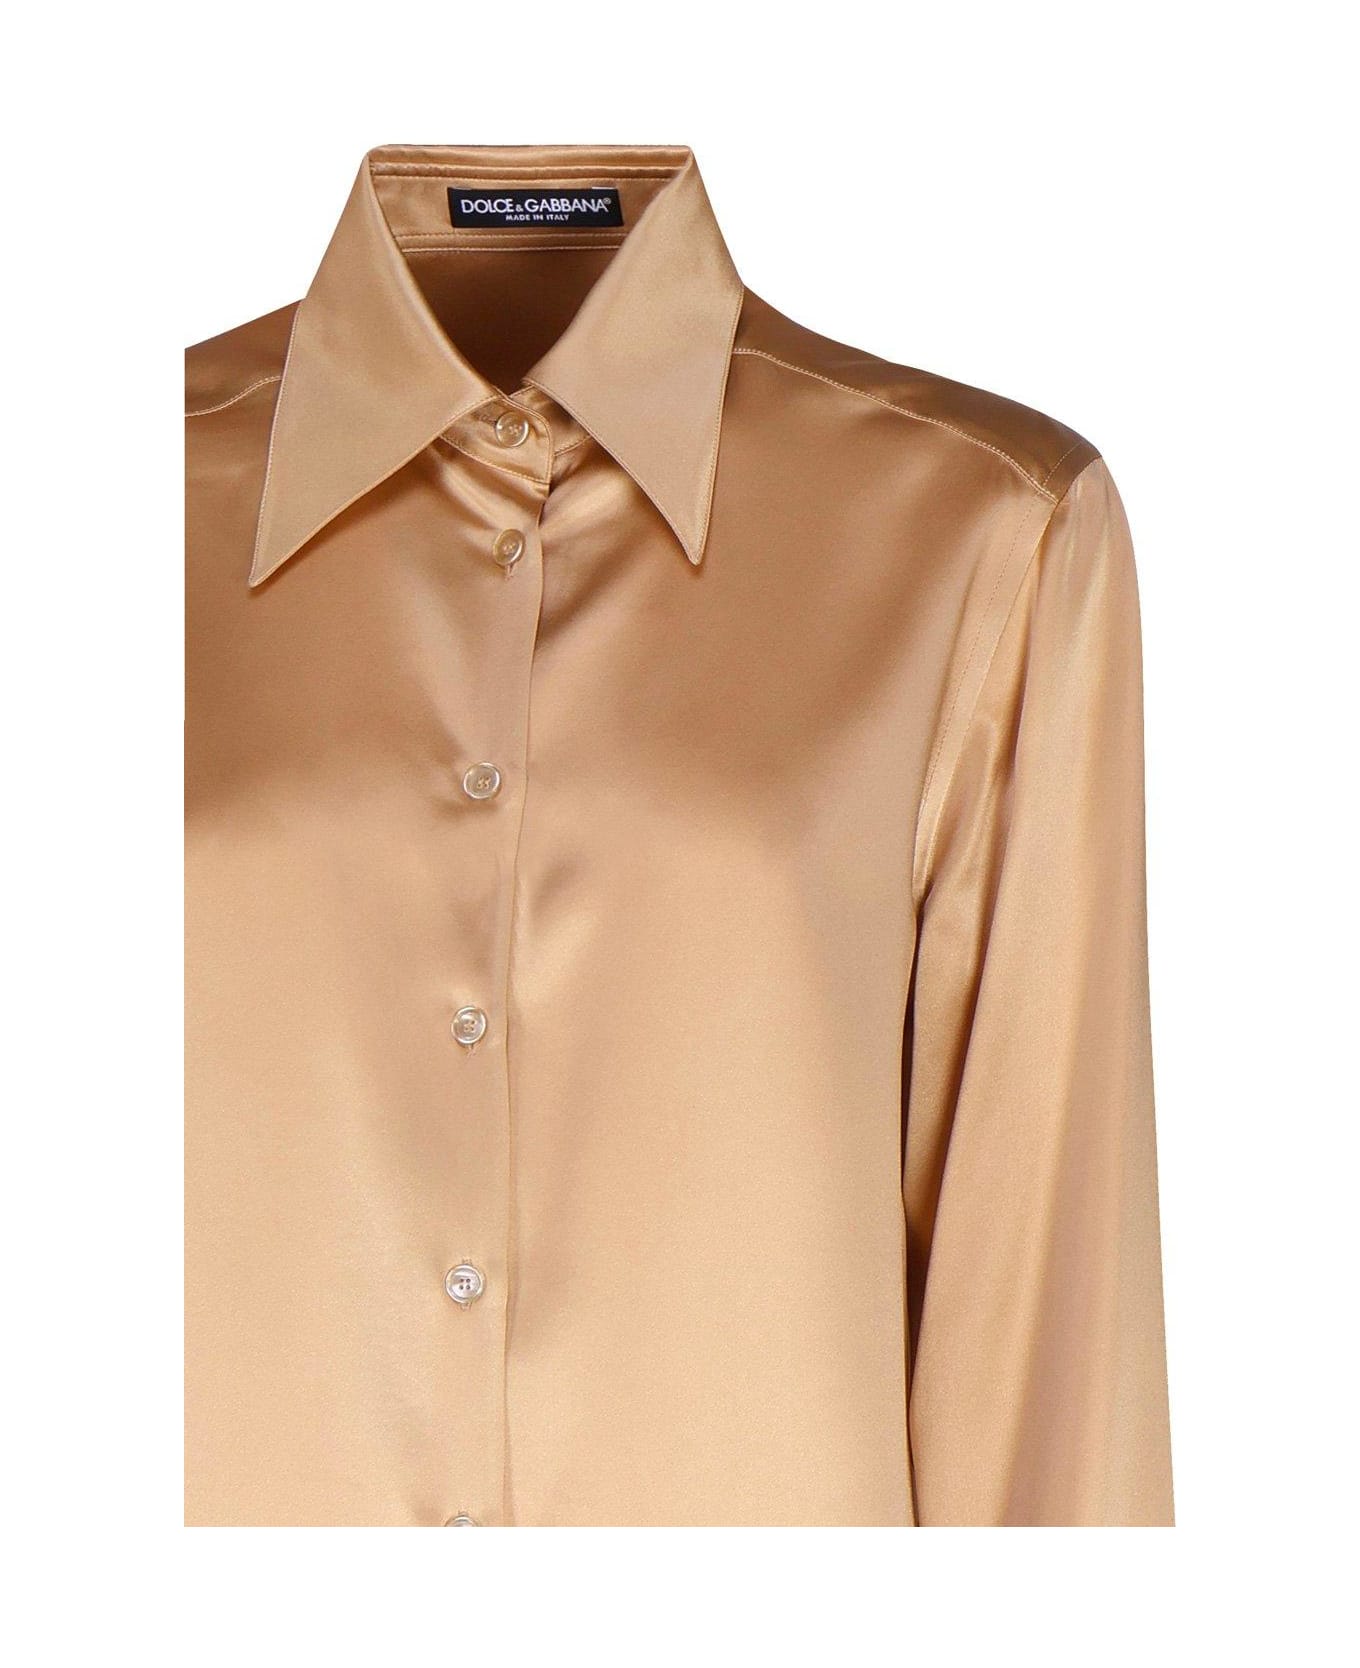 Dolce & Gabbana Classic Shiny Shirt - Brown